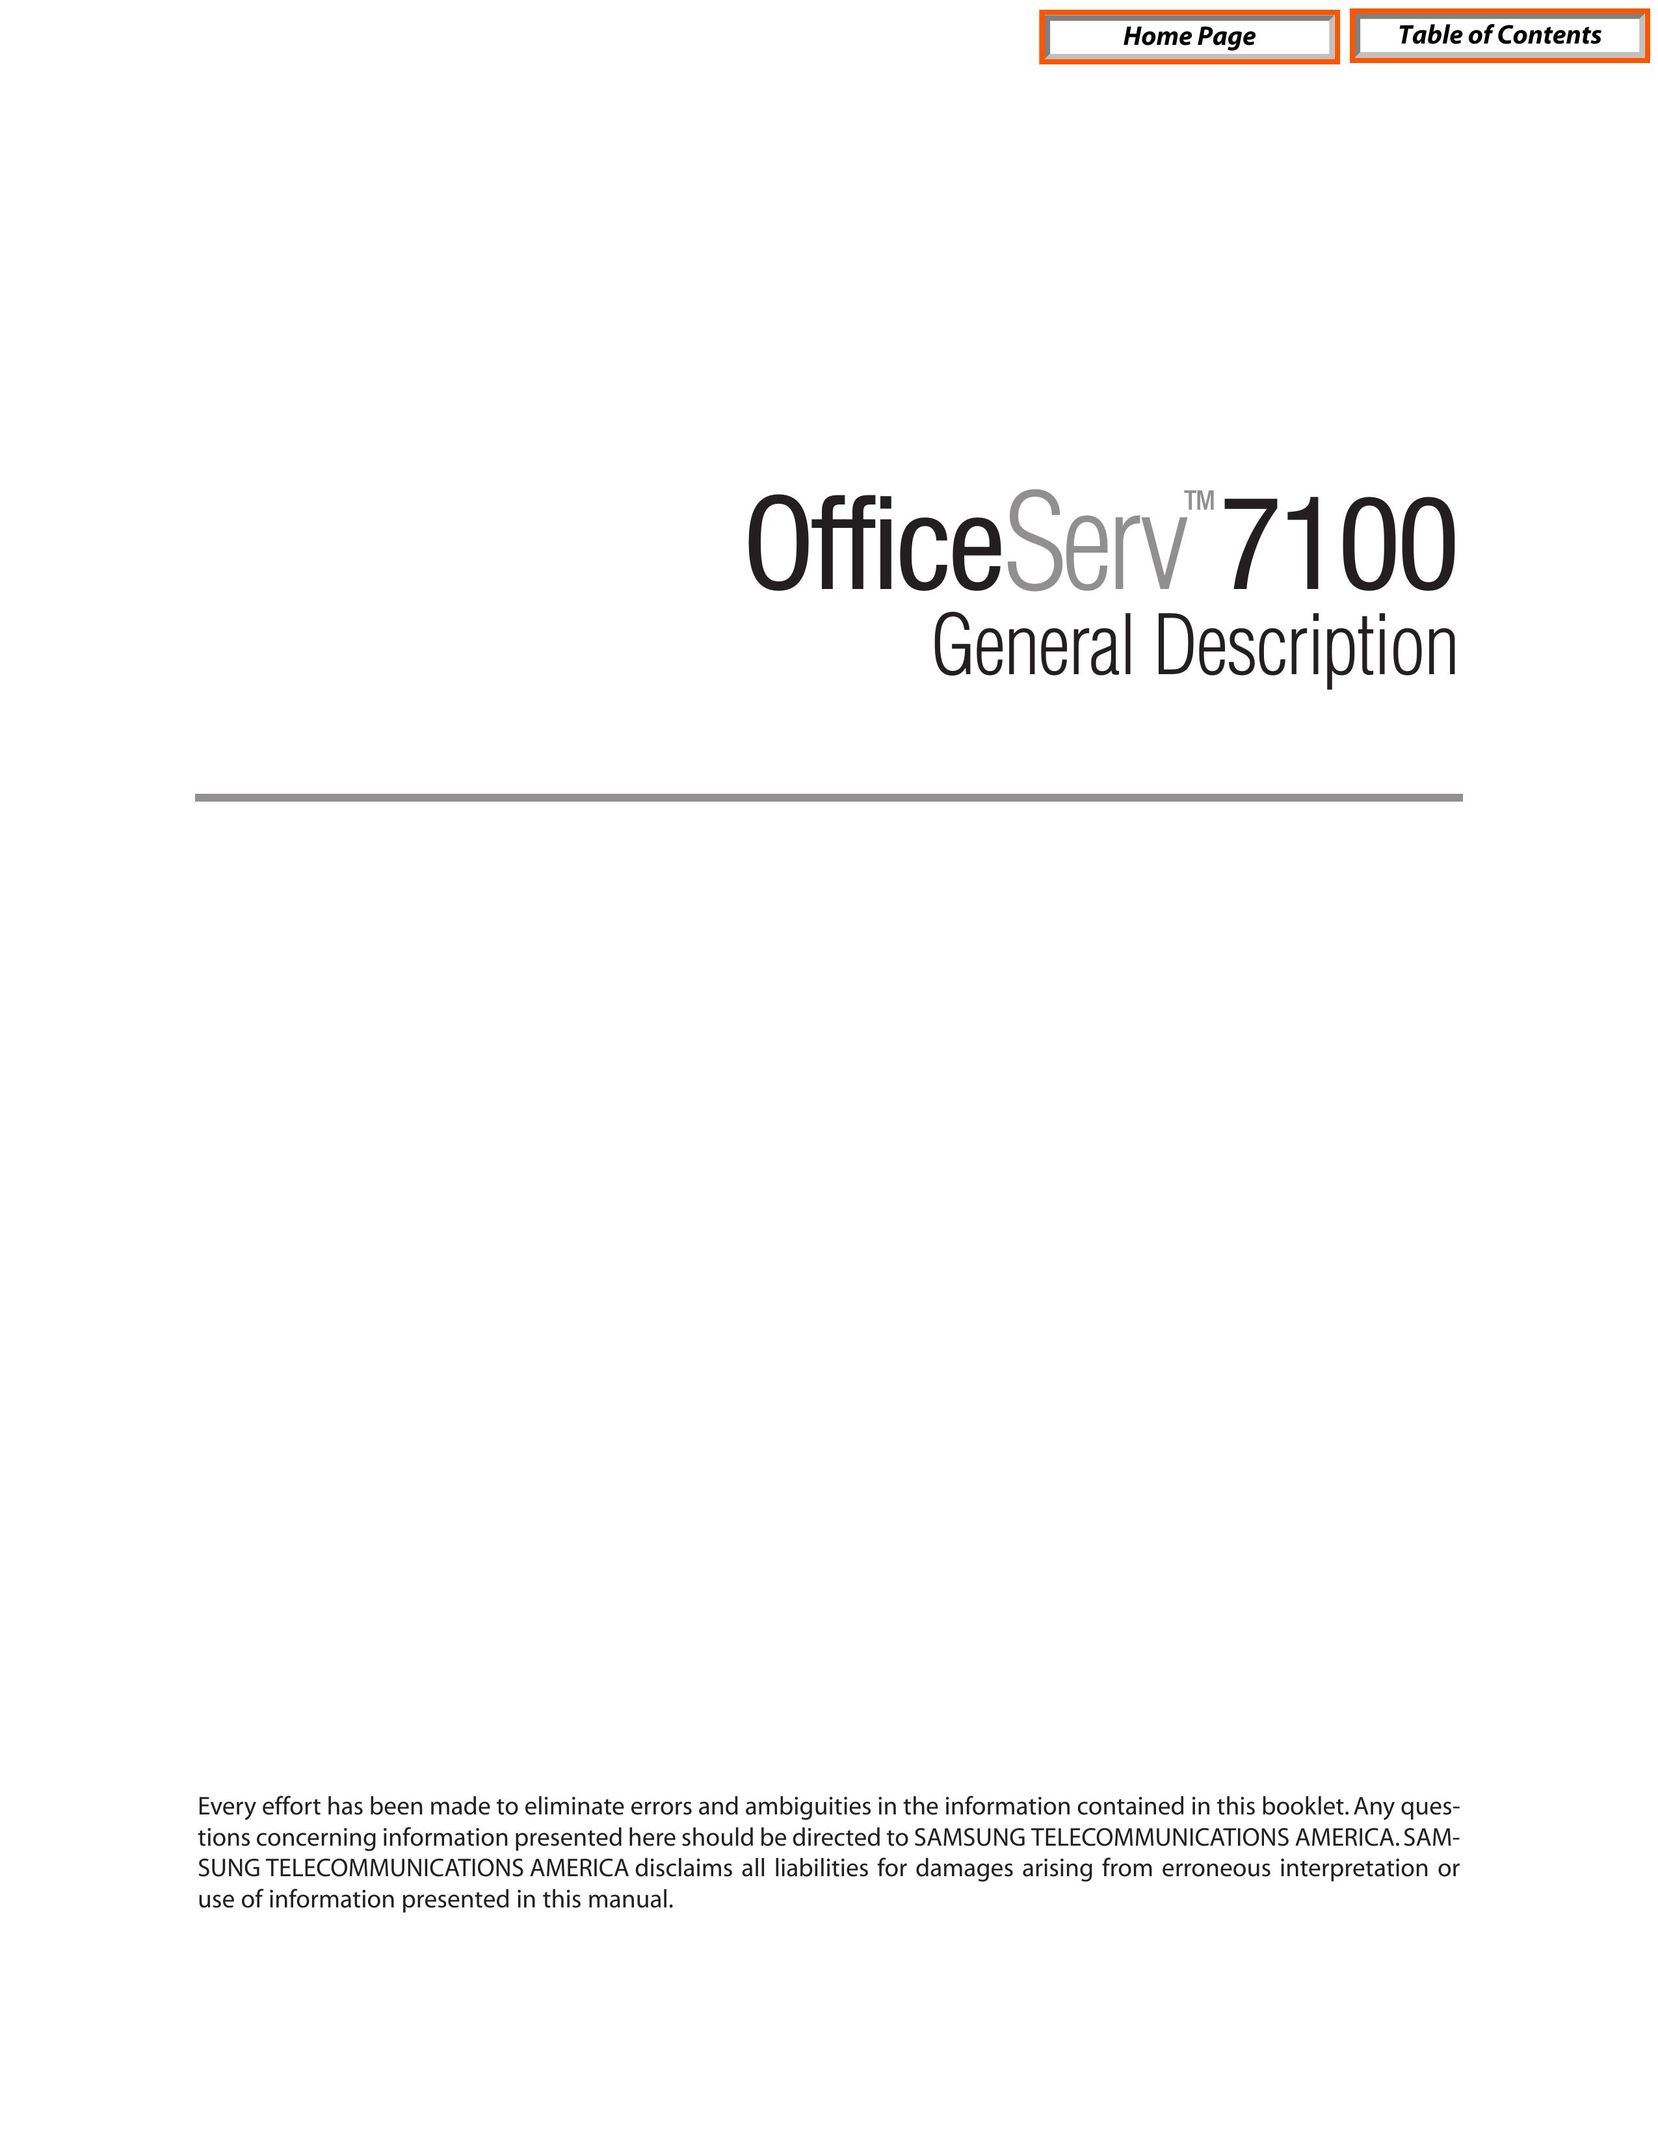 Samsung 7100 IP Phone User Manual